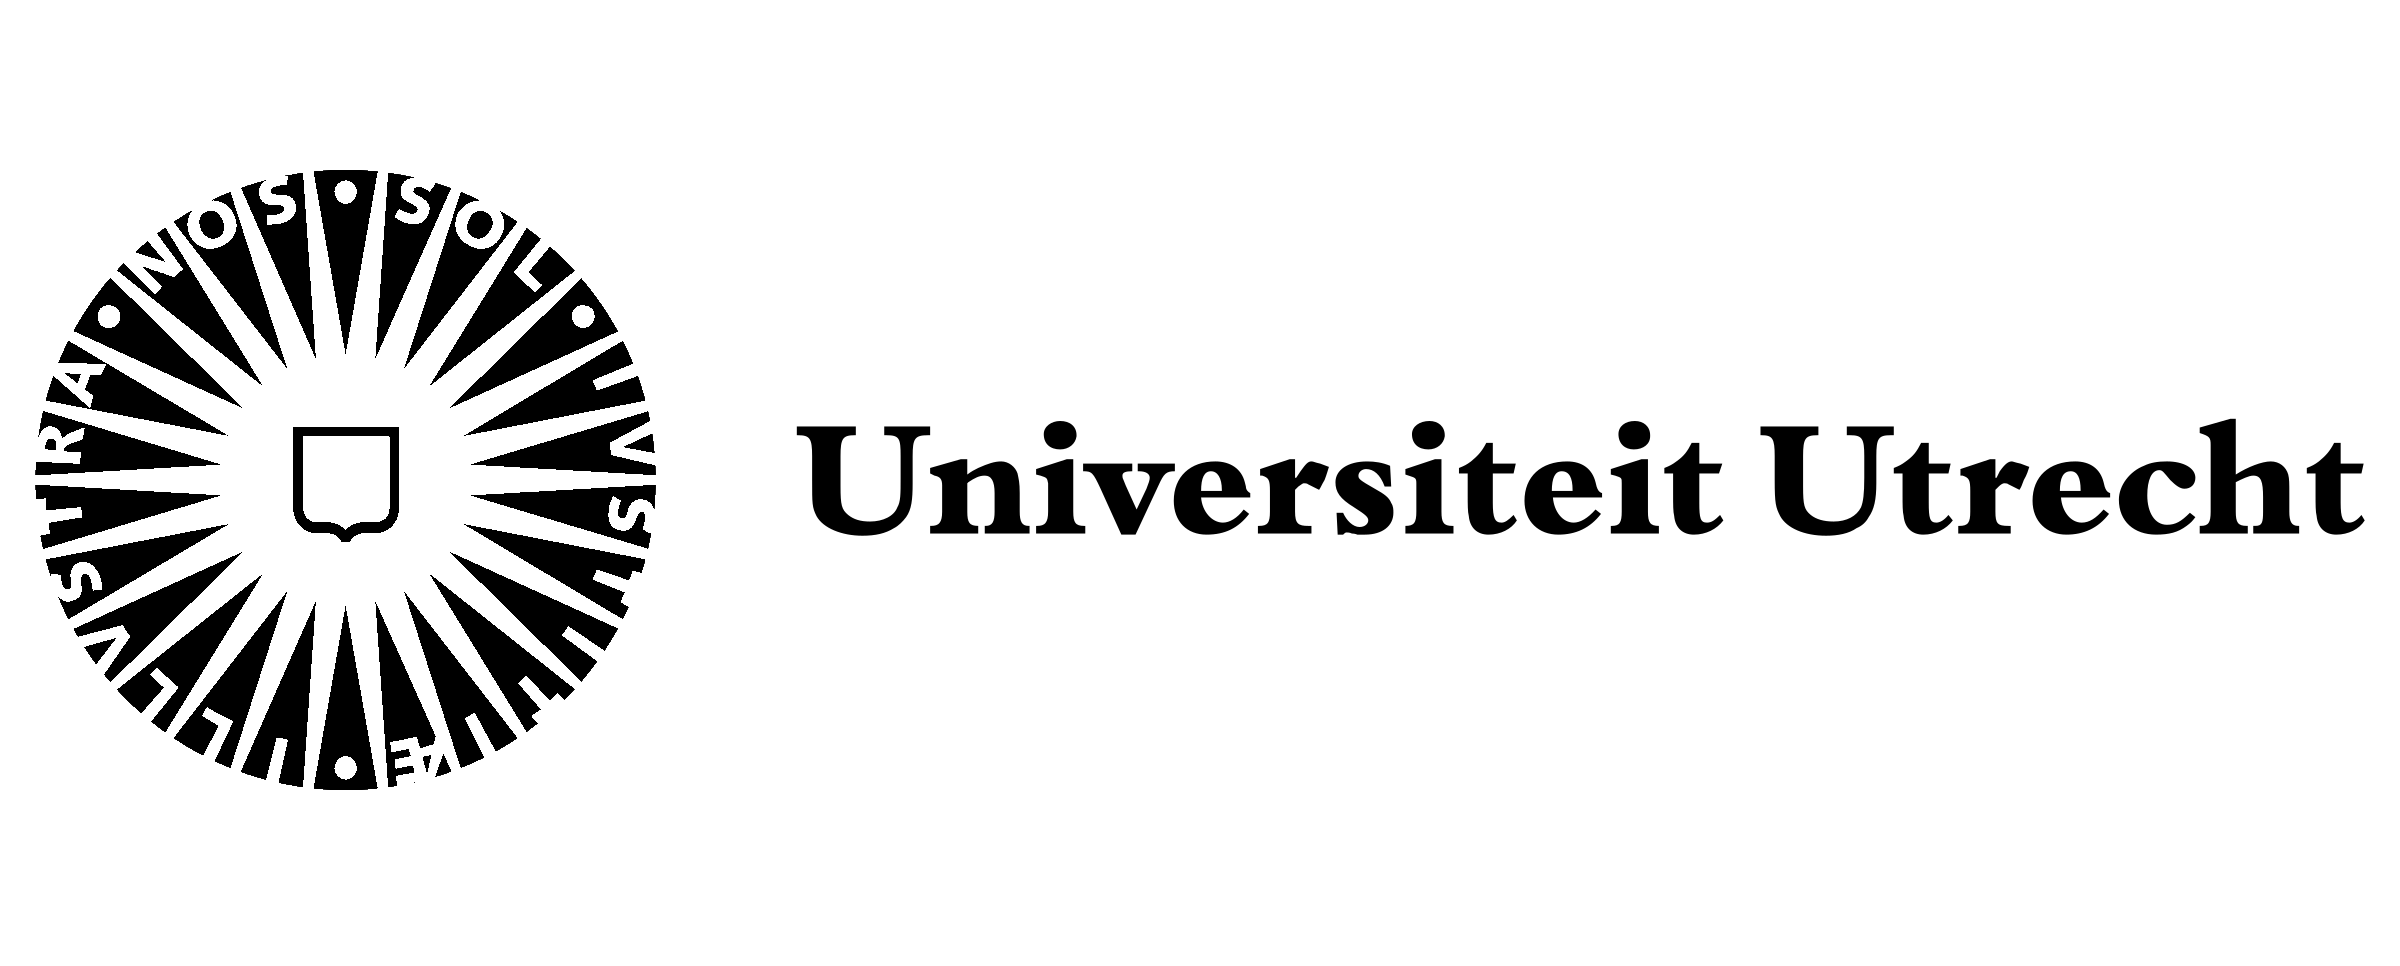 universiteit-utrecht-logo-black-and-white